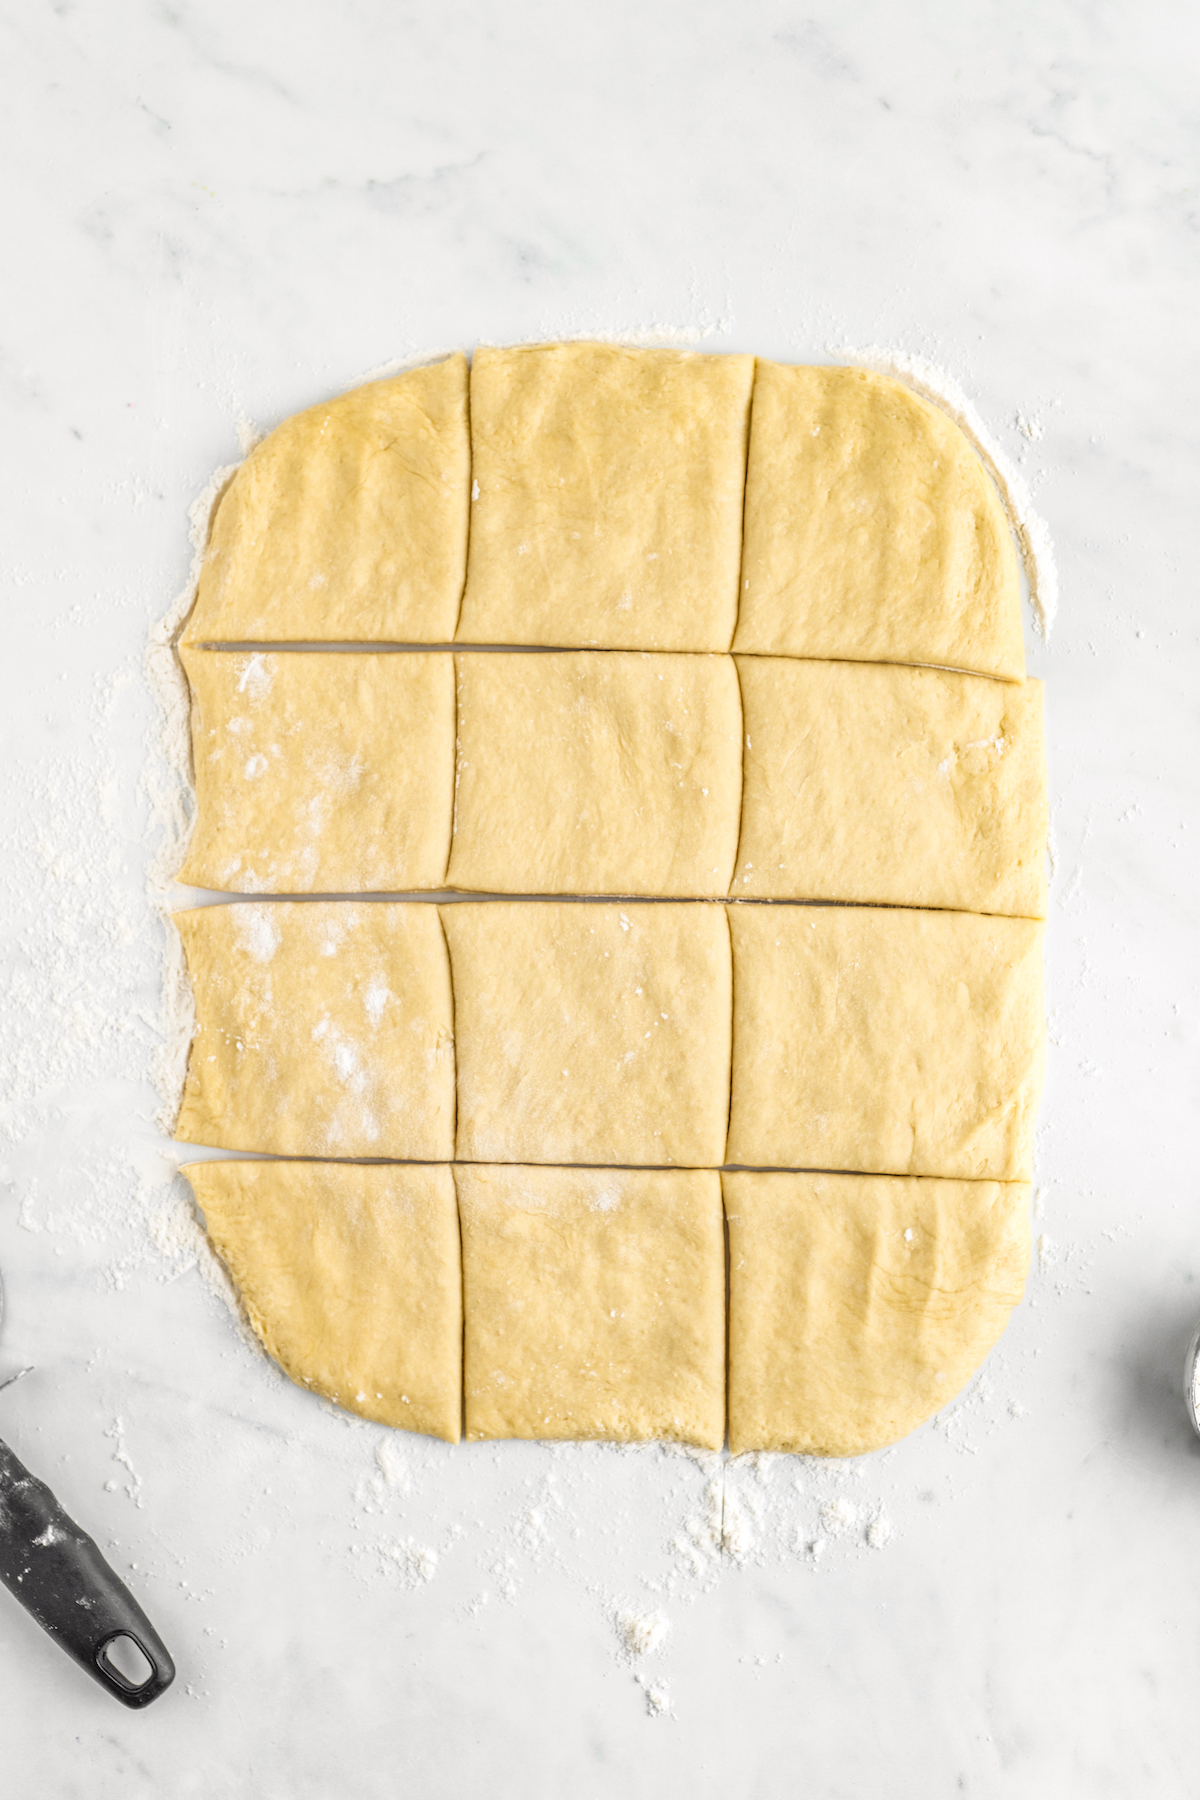 A rectangle of soft dough cut into 12 pieces.